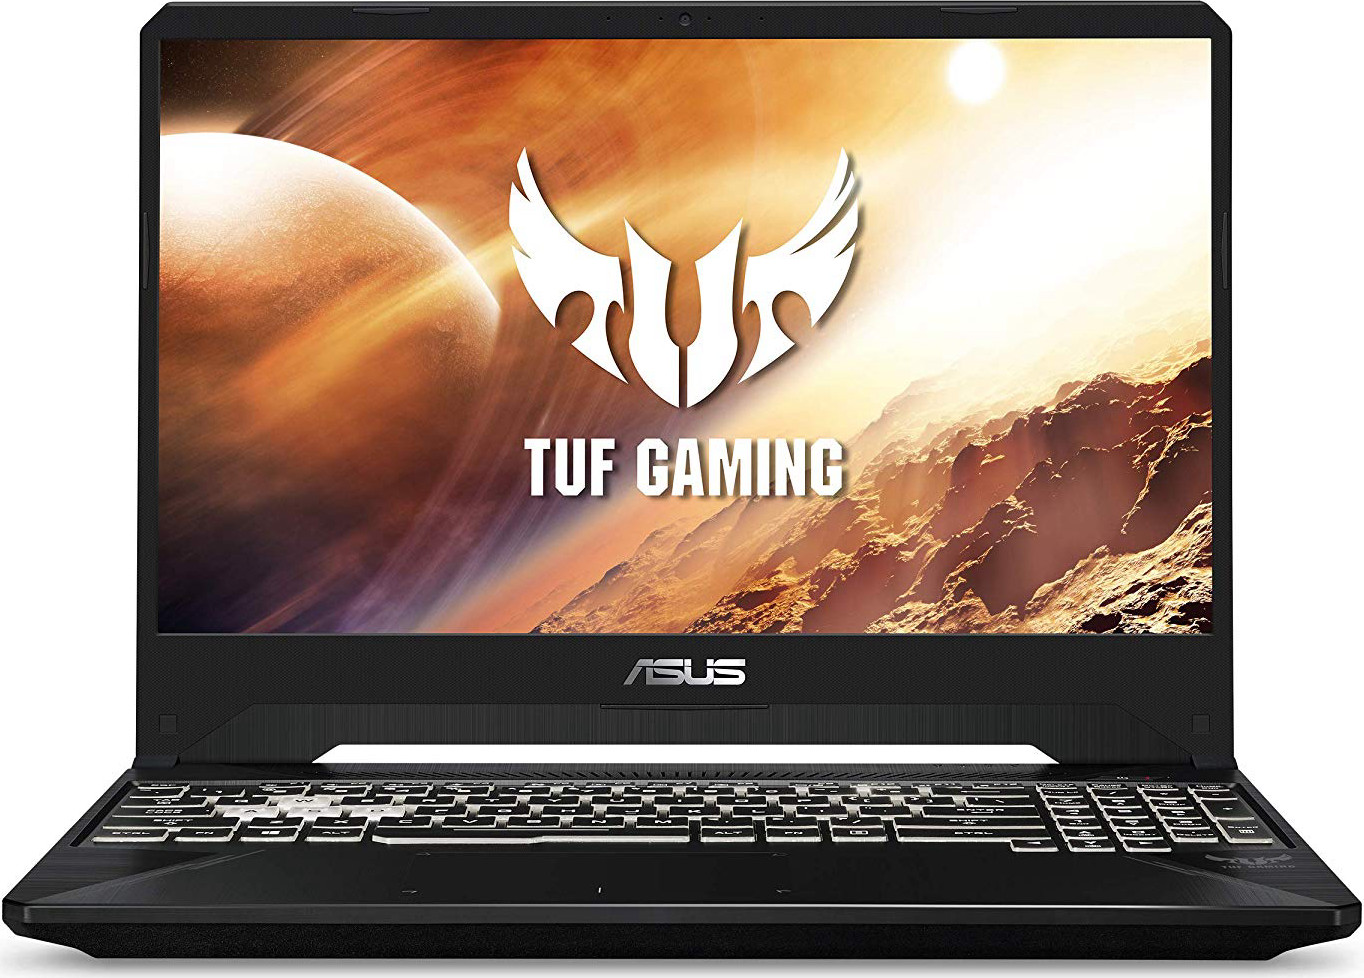 ASUS TUF (2019) Gaming Laptop, 15.6” 120Hz Full HD IPS-Type, AMD Ryzen 7 3750H, GeForce GTX 1650, 8GB DDR4, 512GB PCIe SSD, Gigabit Wi-Fi 5, Windows 10 Home, FX505DT-EB73